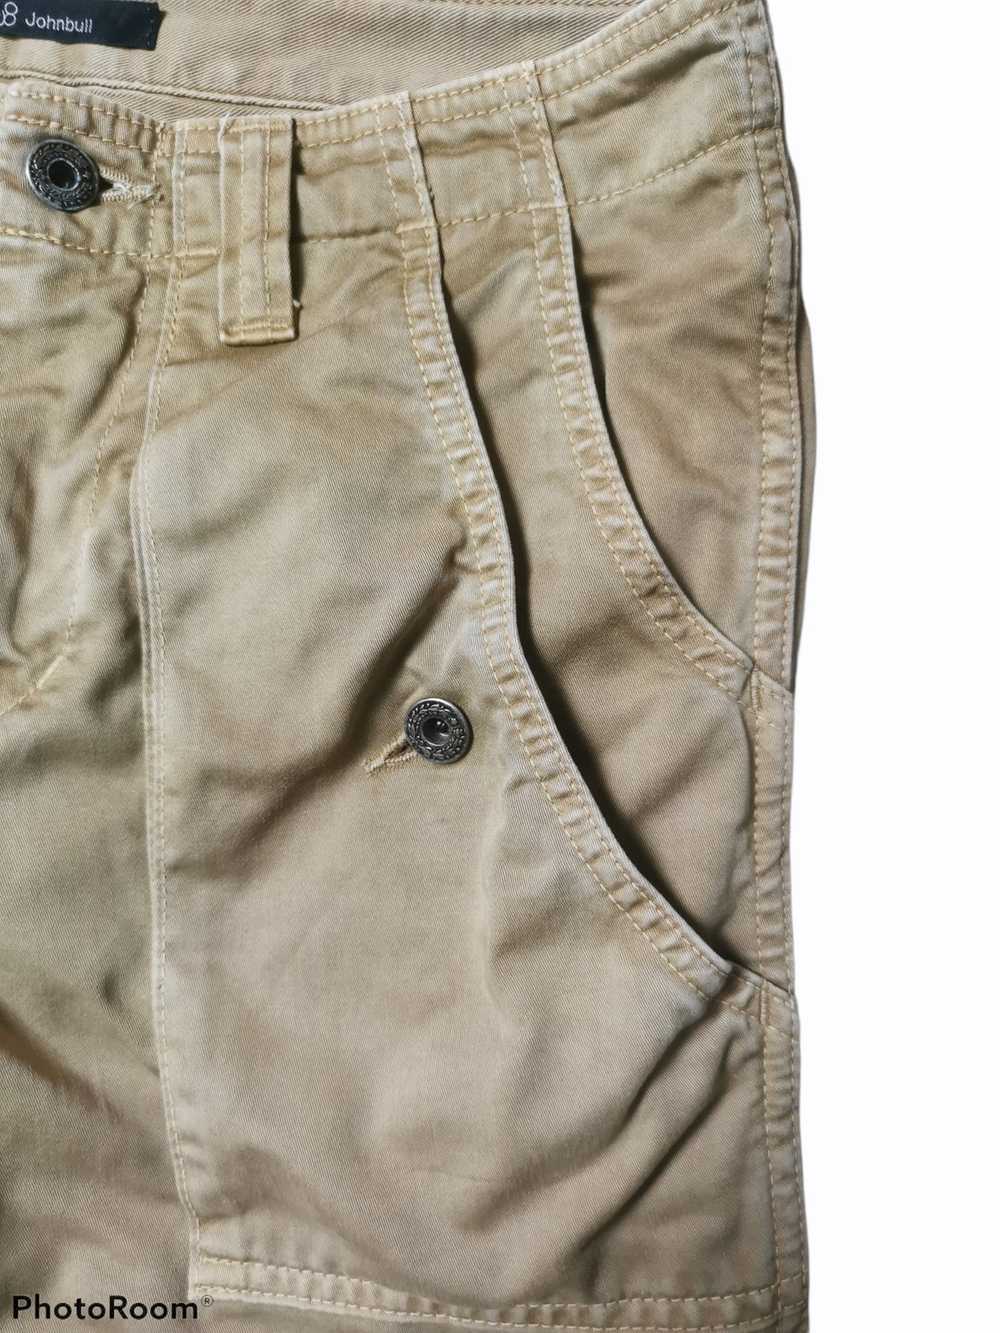 Japanese Brand × John Bull John Bull Trousers Pant - image 4